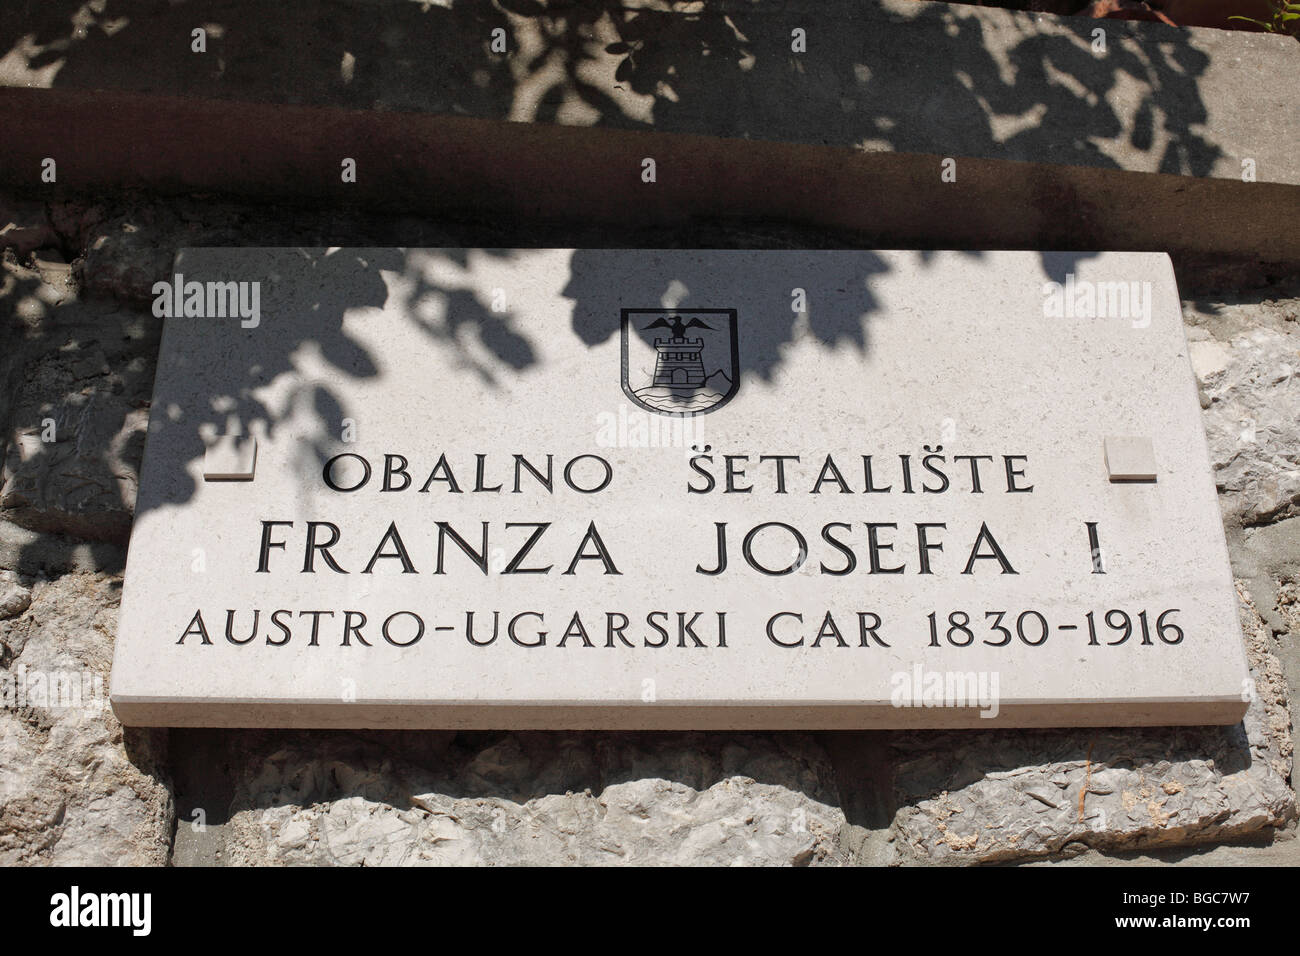 Gedenktafel an der Promenade Lungomare Obalno Setaliste habe Josefa I. Austro-Ugarski Auto 1830-1916, Opatija, Istrien, Kvarner Gu Stockfoto